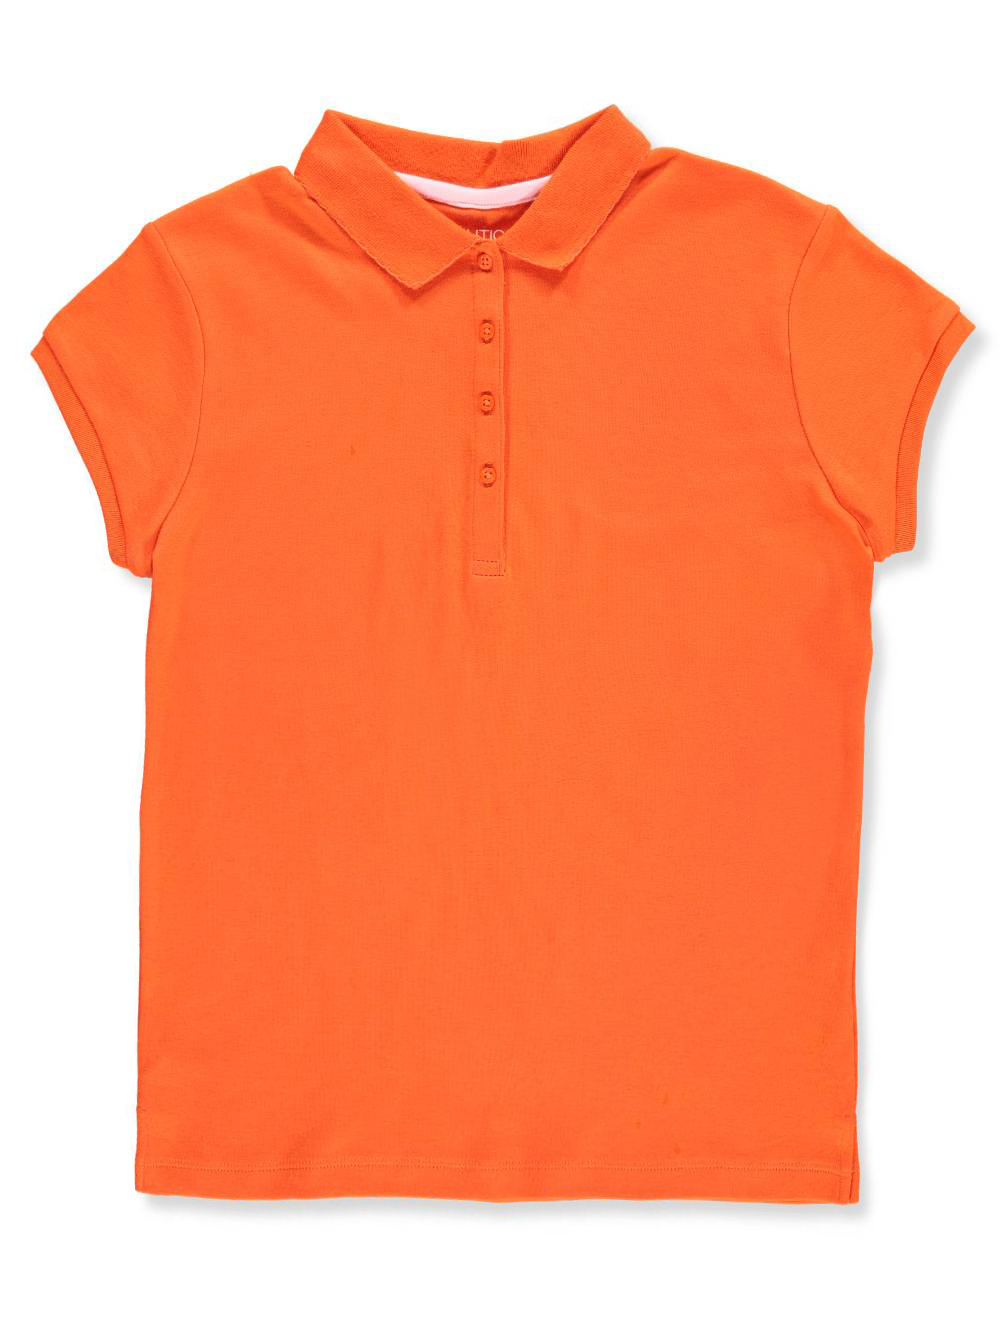 Girls Orange Knit Tops